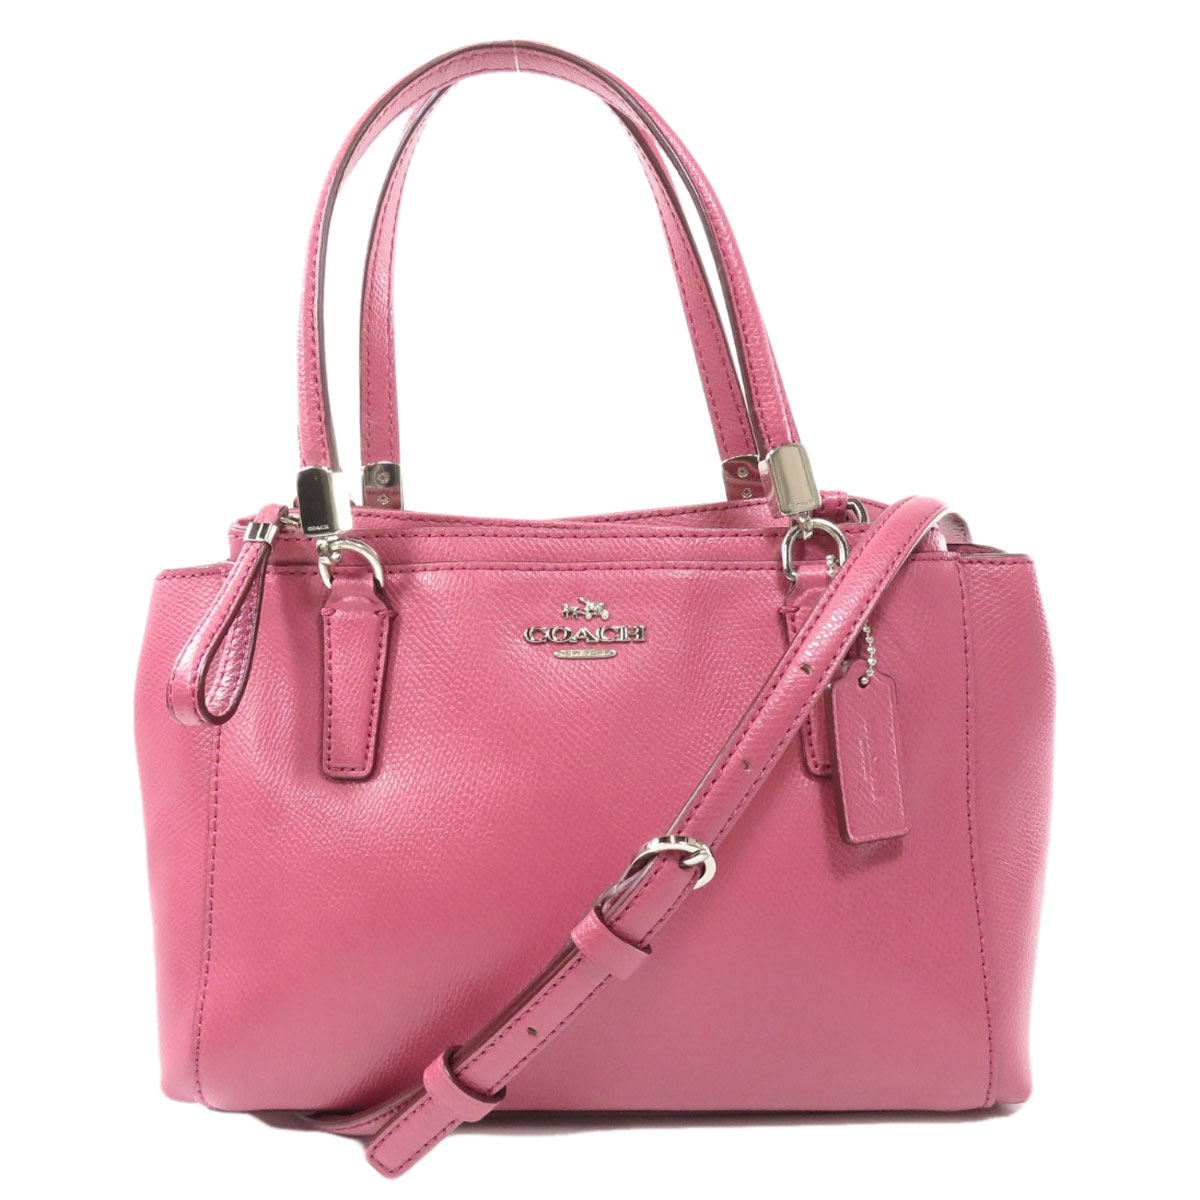 COACH F34797 Handbag 2WAY Leather | eBay